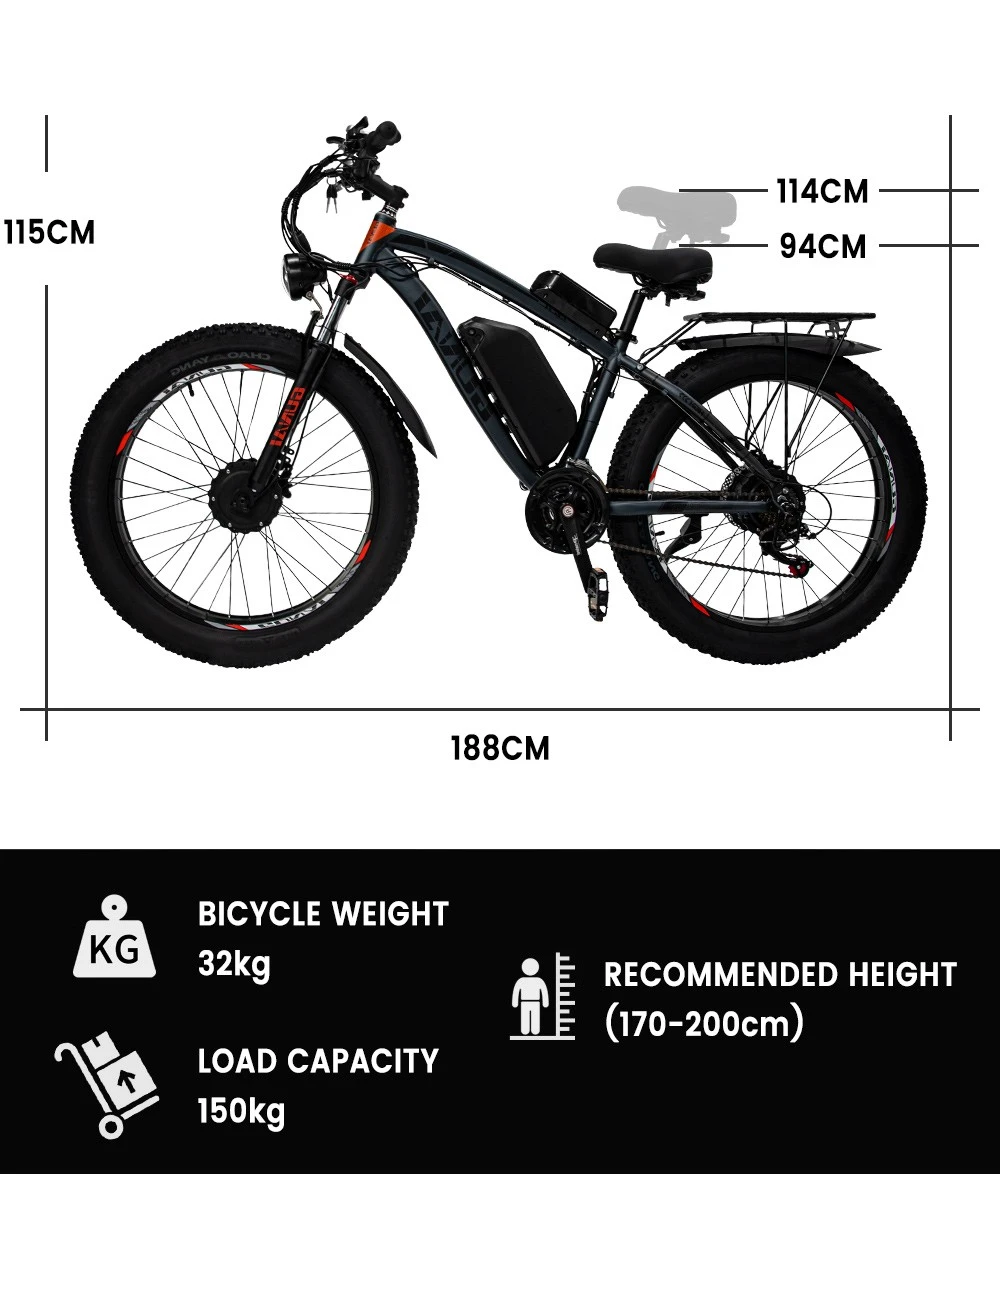 GUNAI GN88 Electric Mountain Bike 26*4.0in Fat Tires 1000W*2 Motors 55km/h Max Speed 48V 22Ah Battery 130km Range